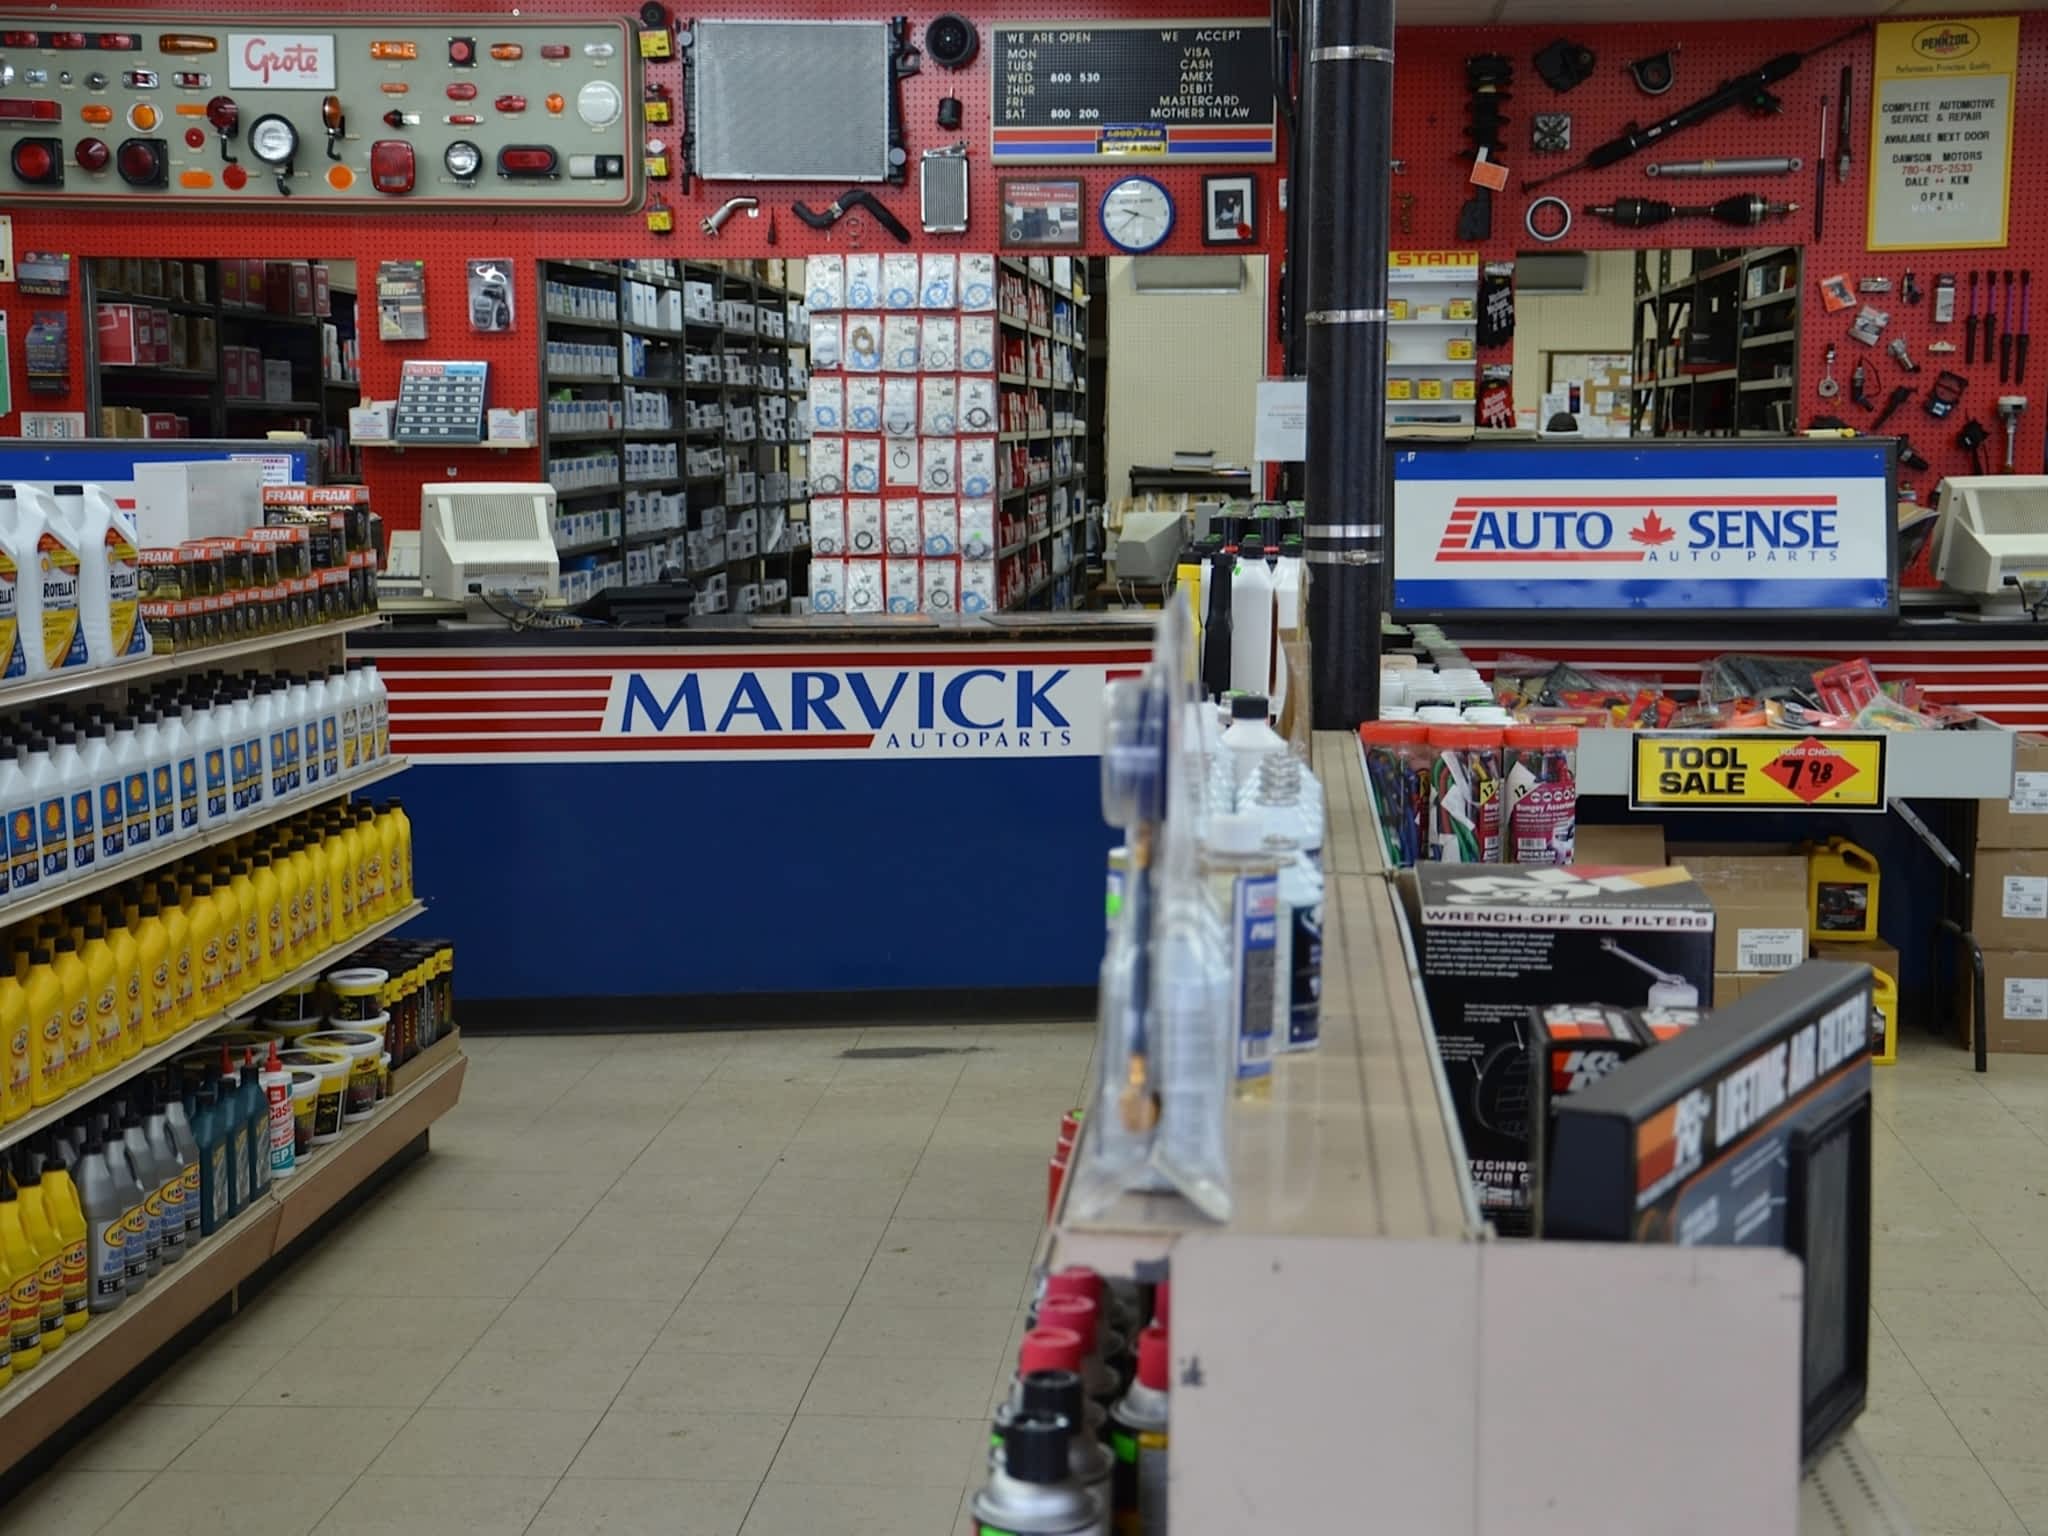 photo Marvick Automotive Supply Ltd